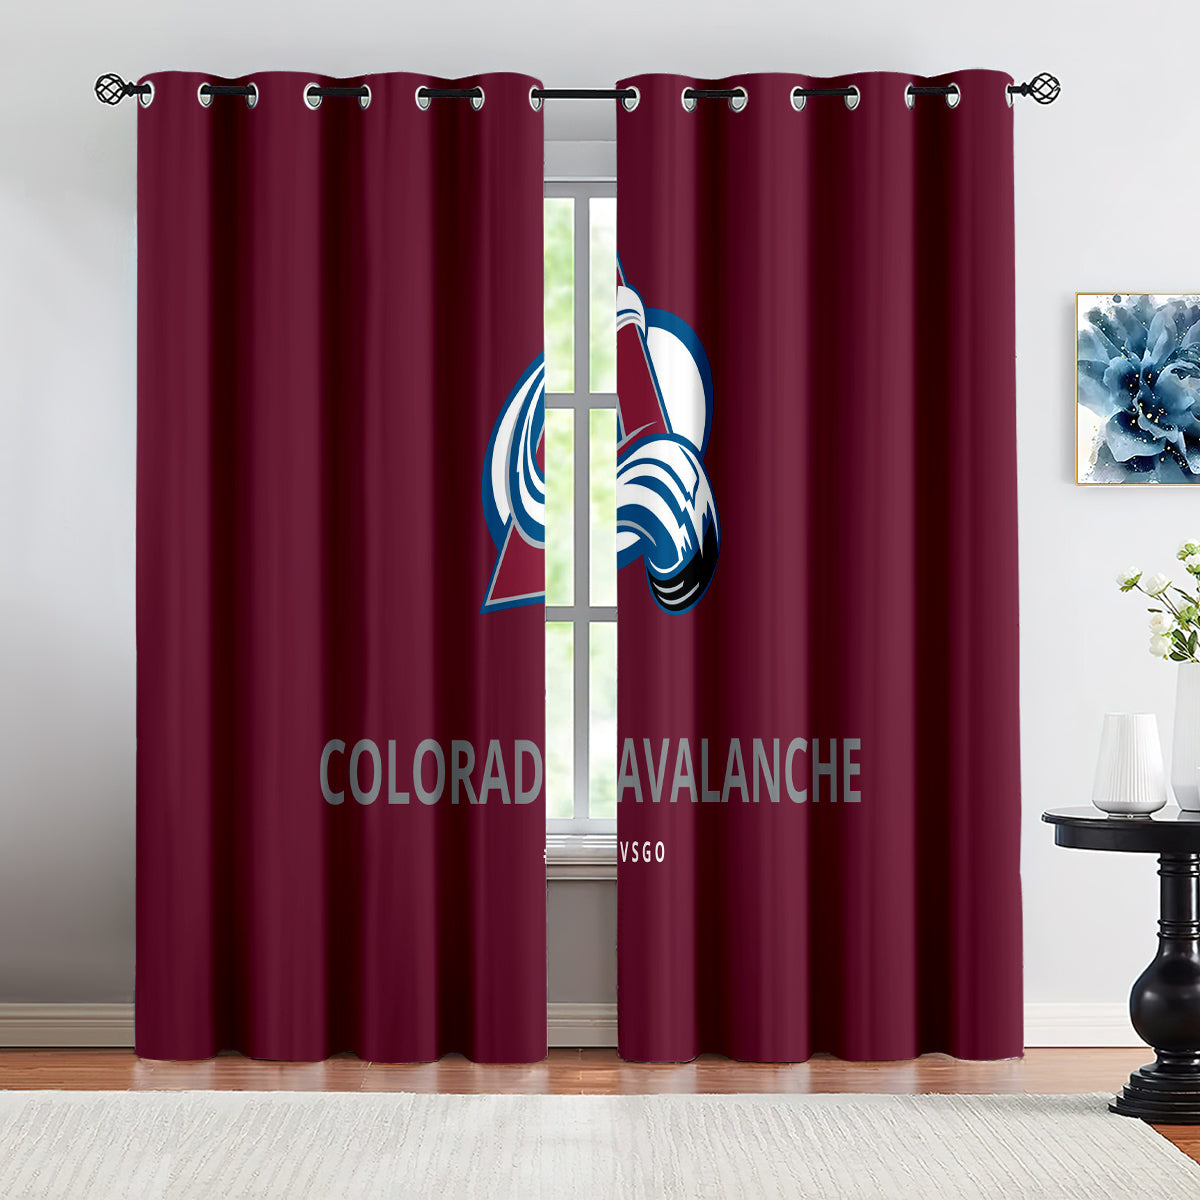 Colorado Avalanche Hockey League Blackout Curtains Drapes For Window Treatment Set